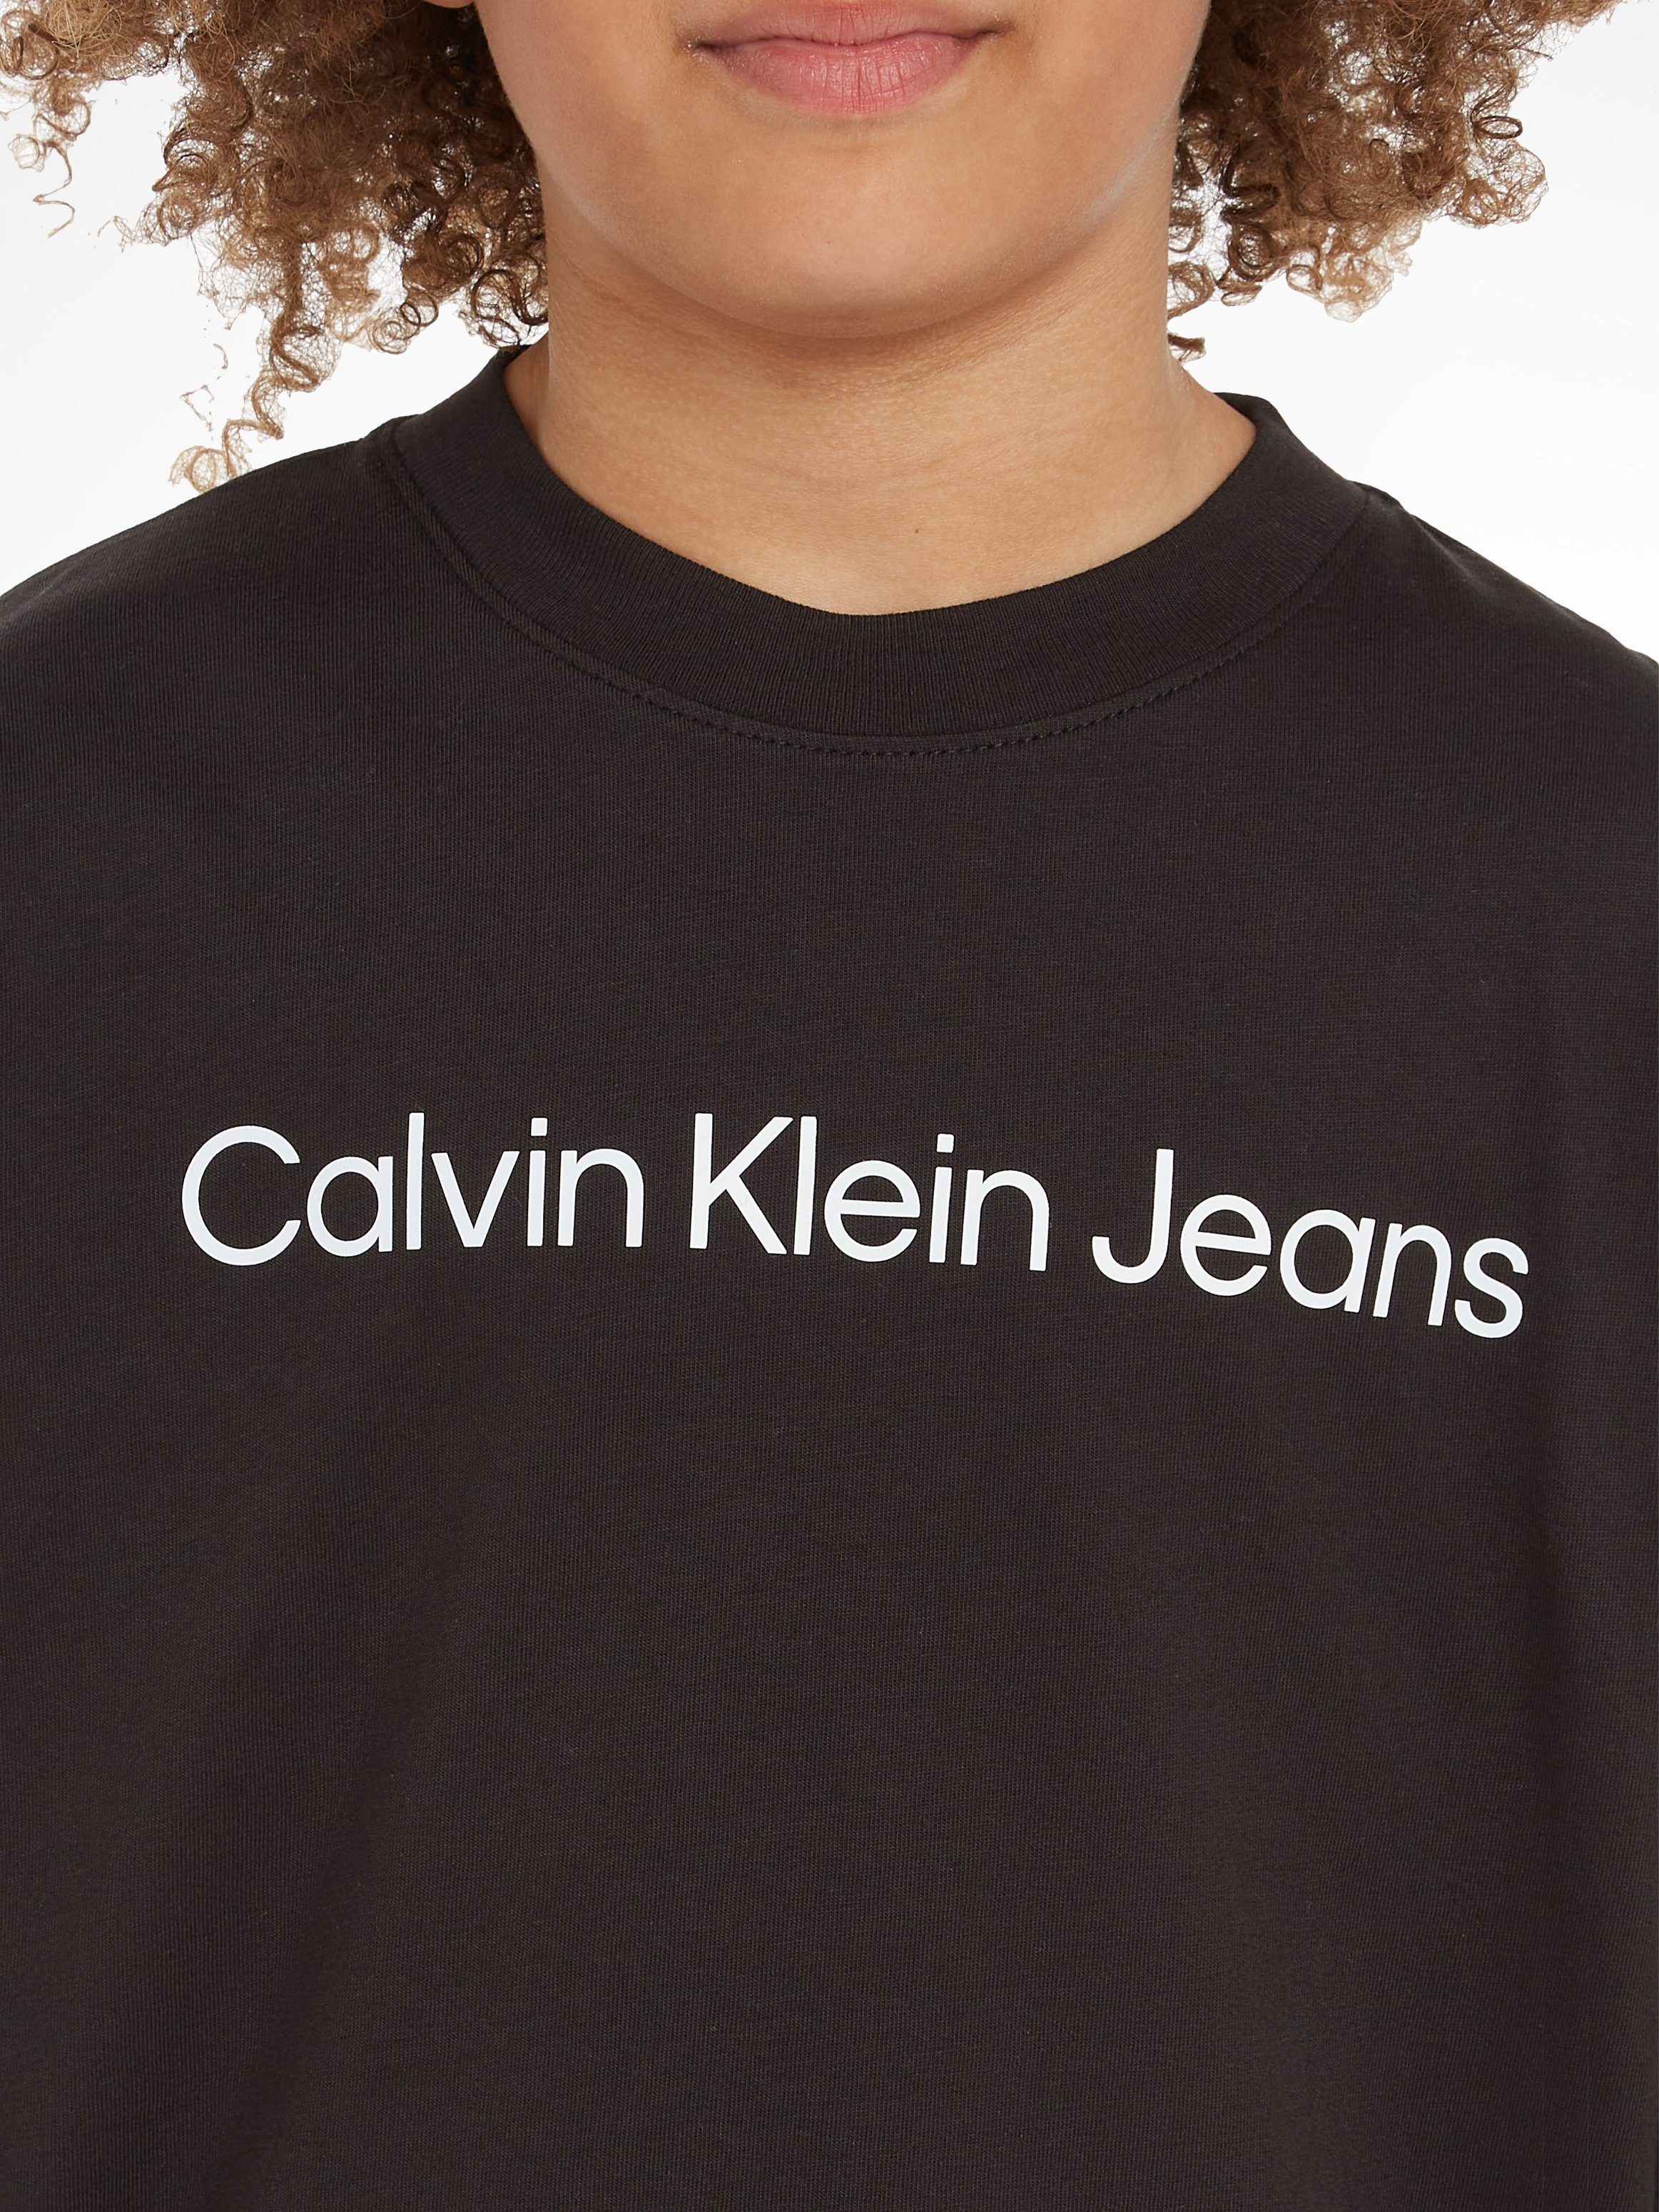 Jeans INST. RELAXED Calvin Klein T-SHIRT Ck LOGO mit Langarmshirt Logodruck glänzenden LS Black